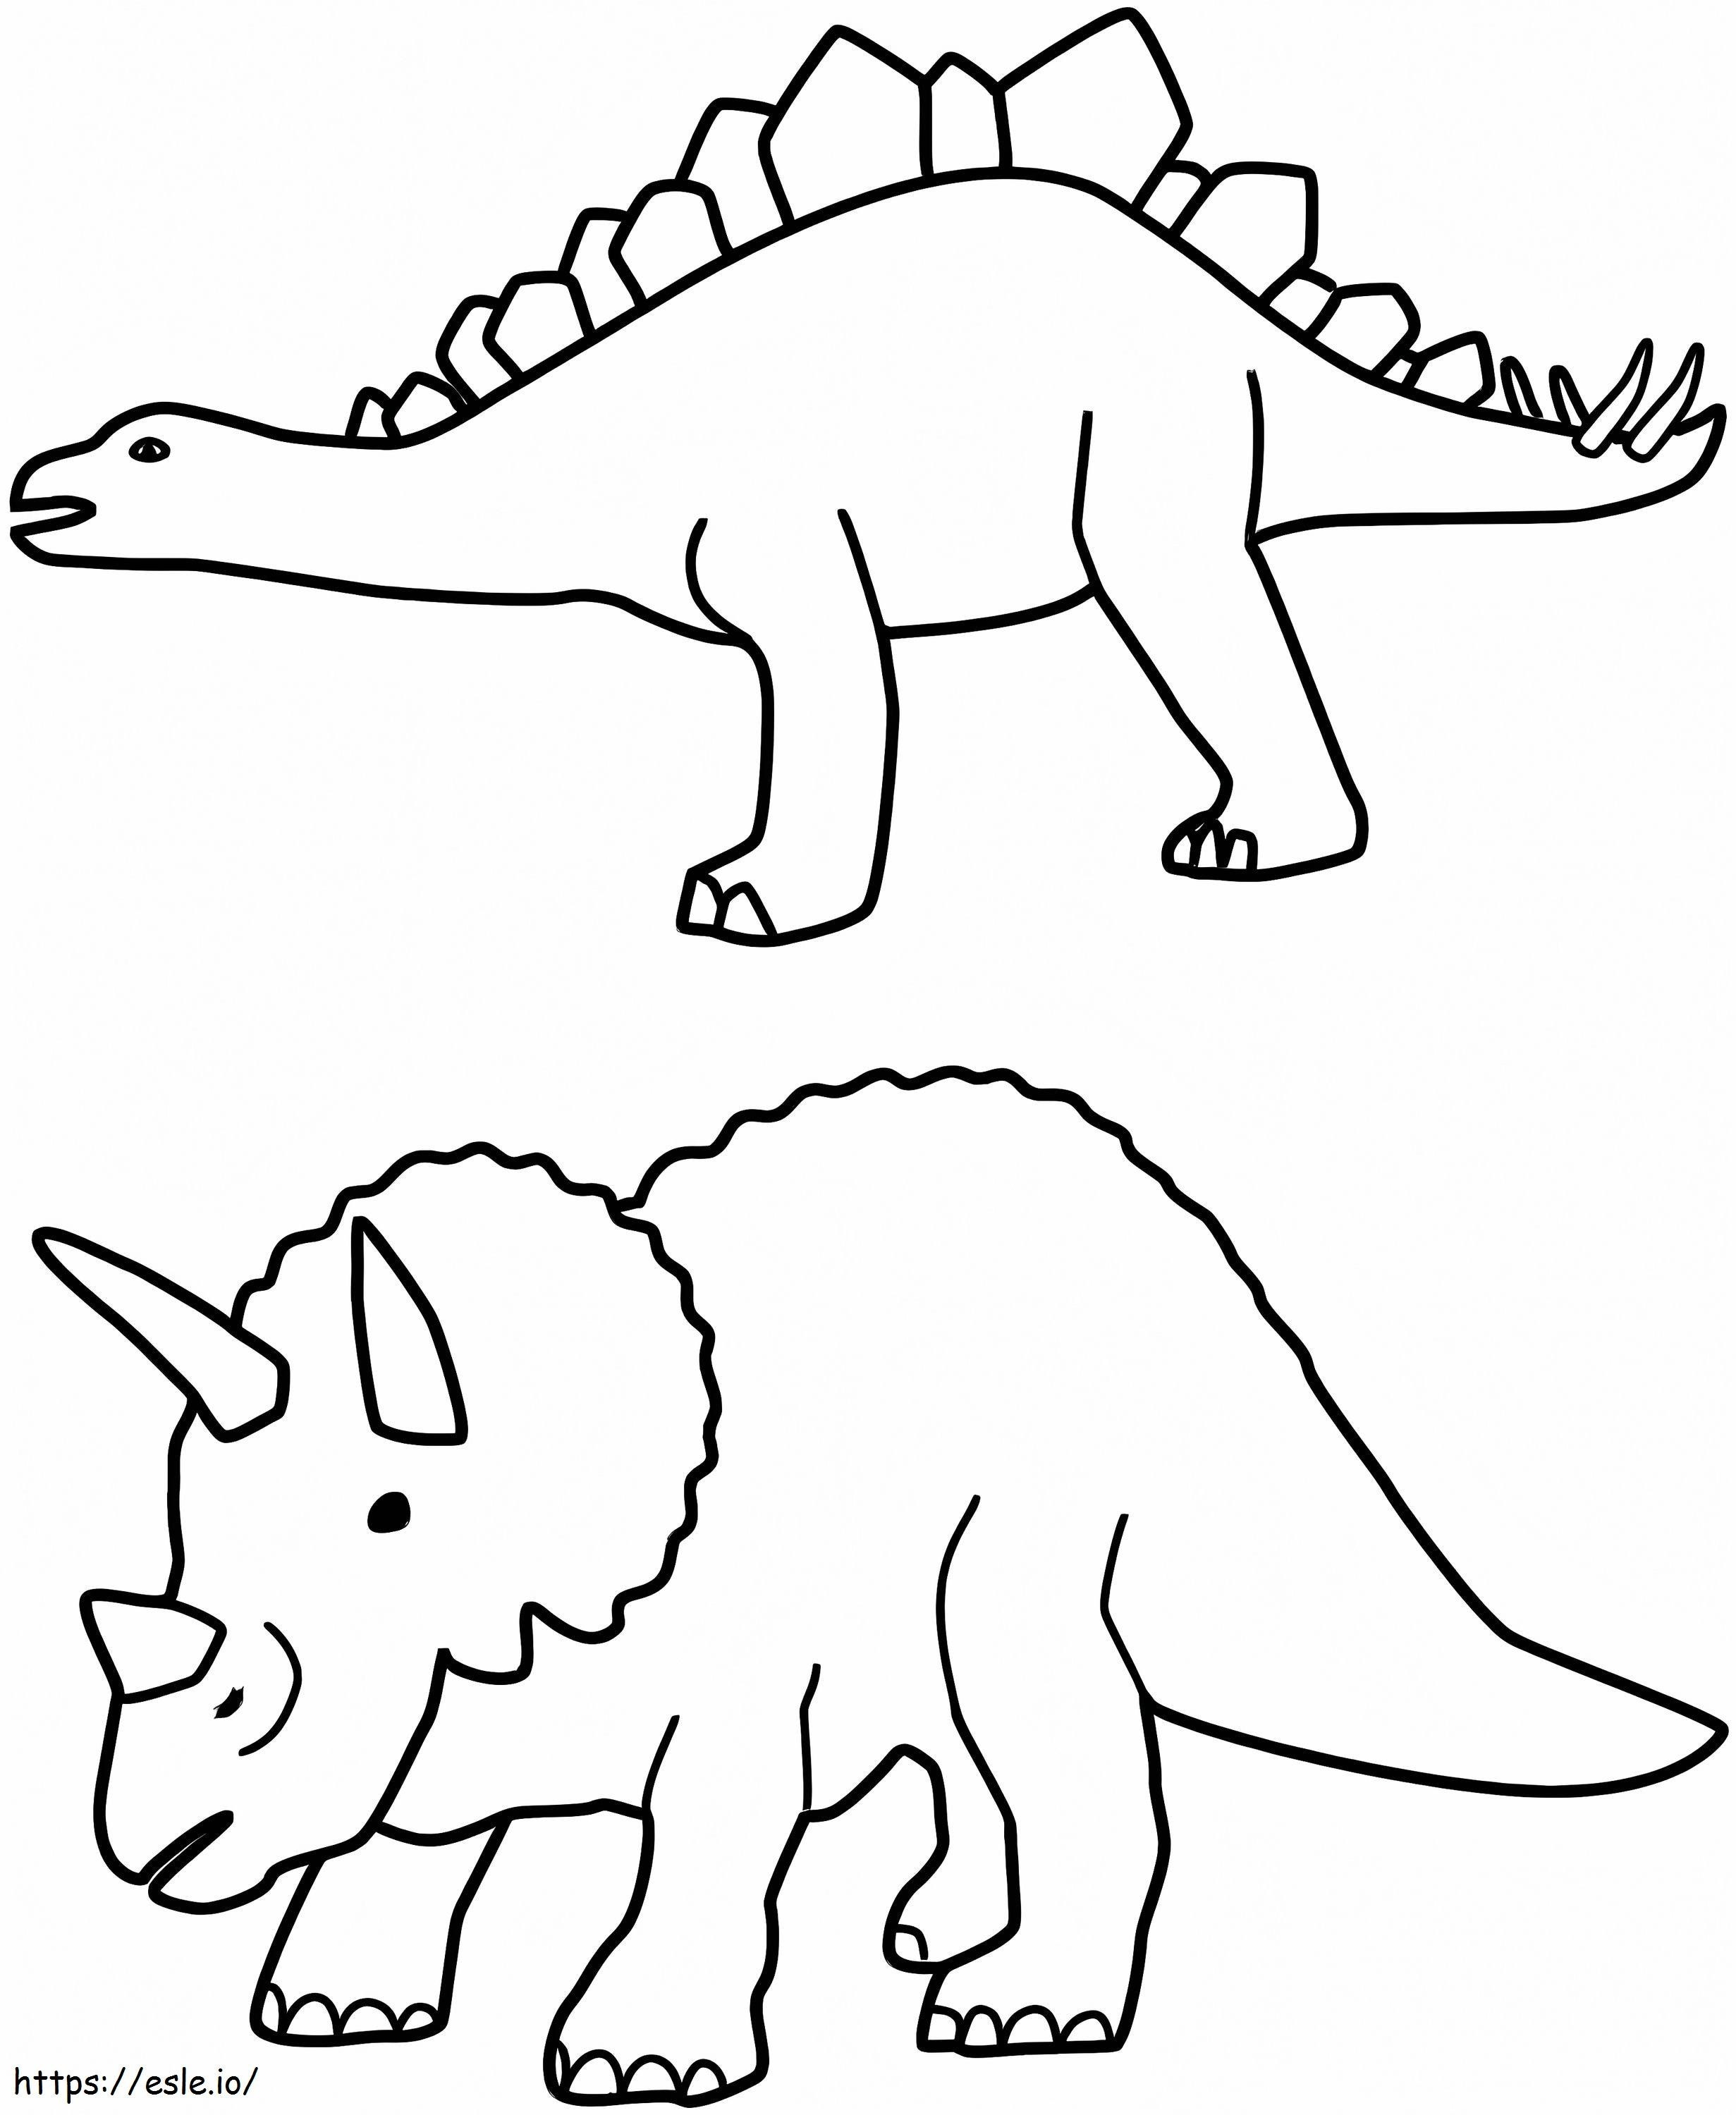 Estegozaur i Triceratops kolorowanka